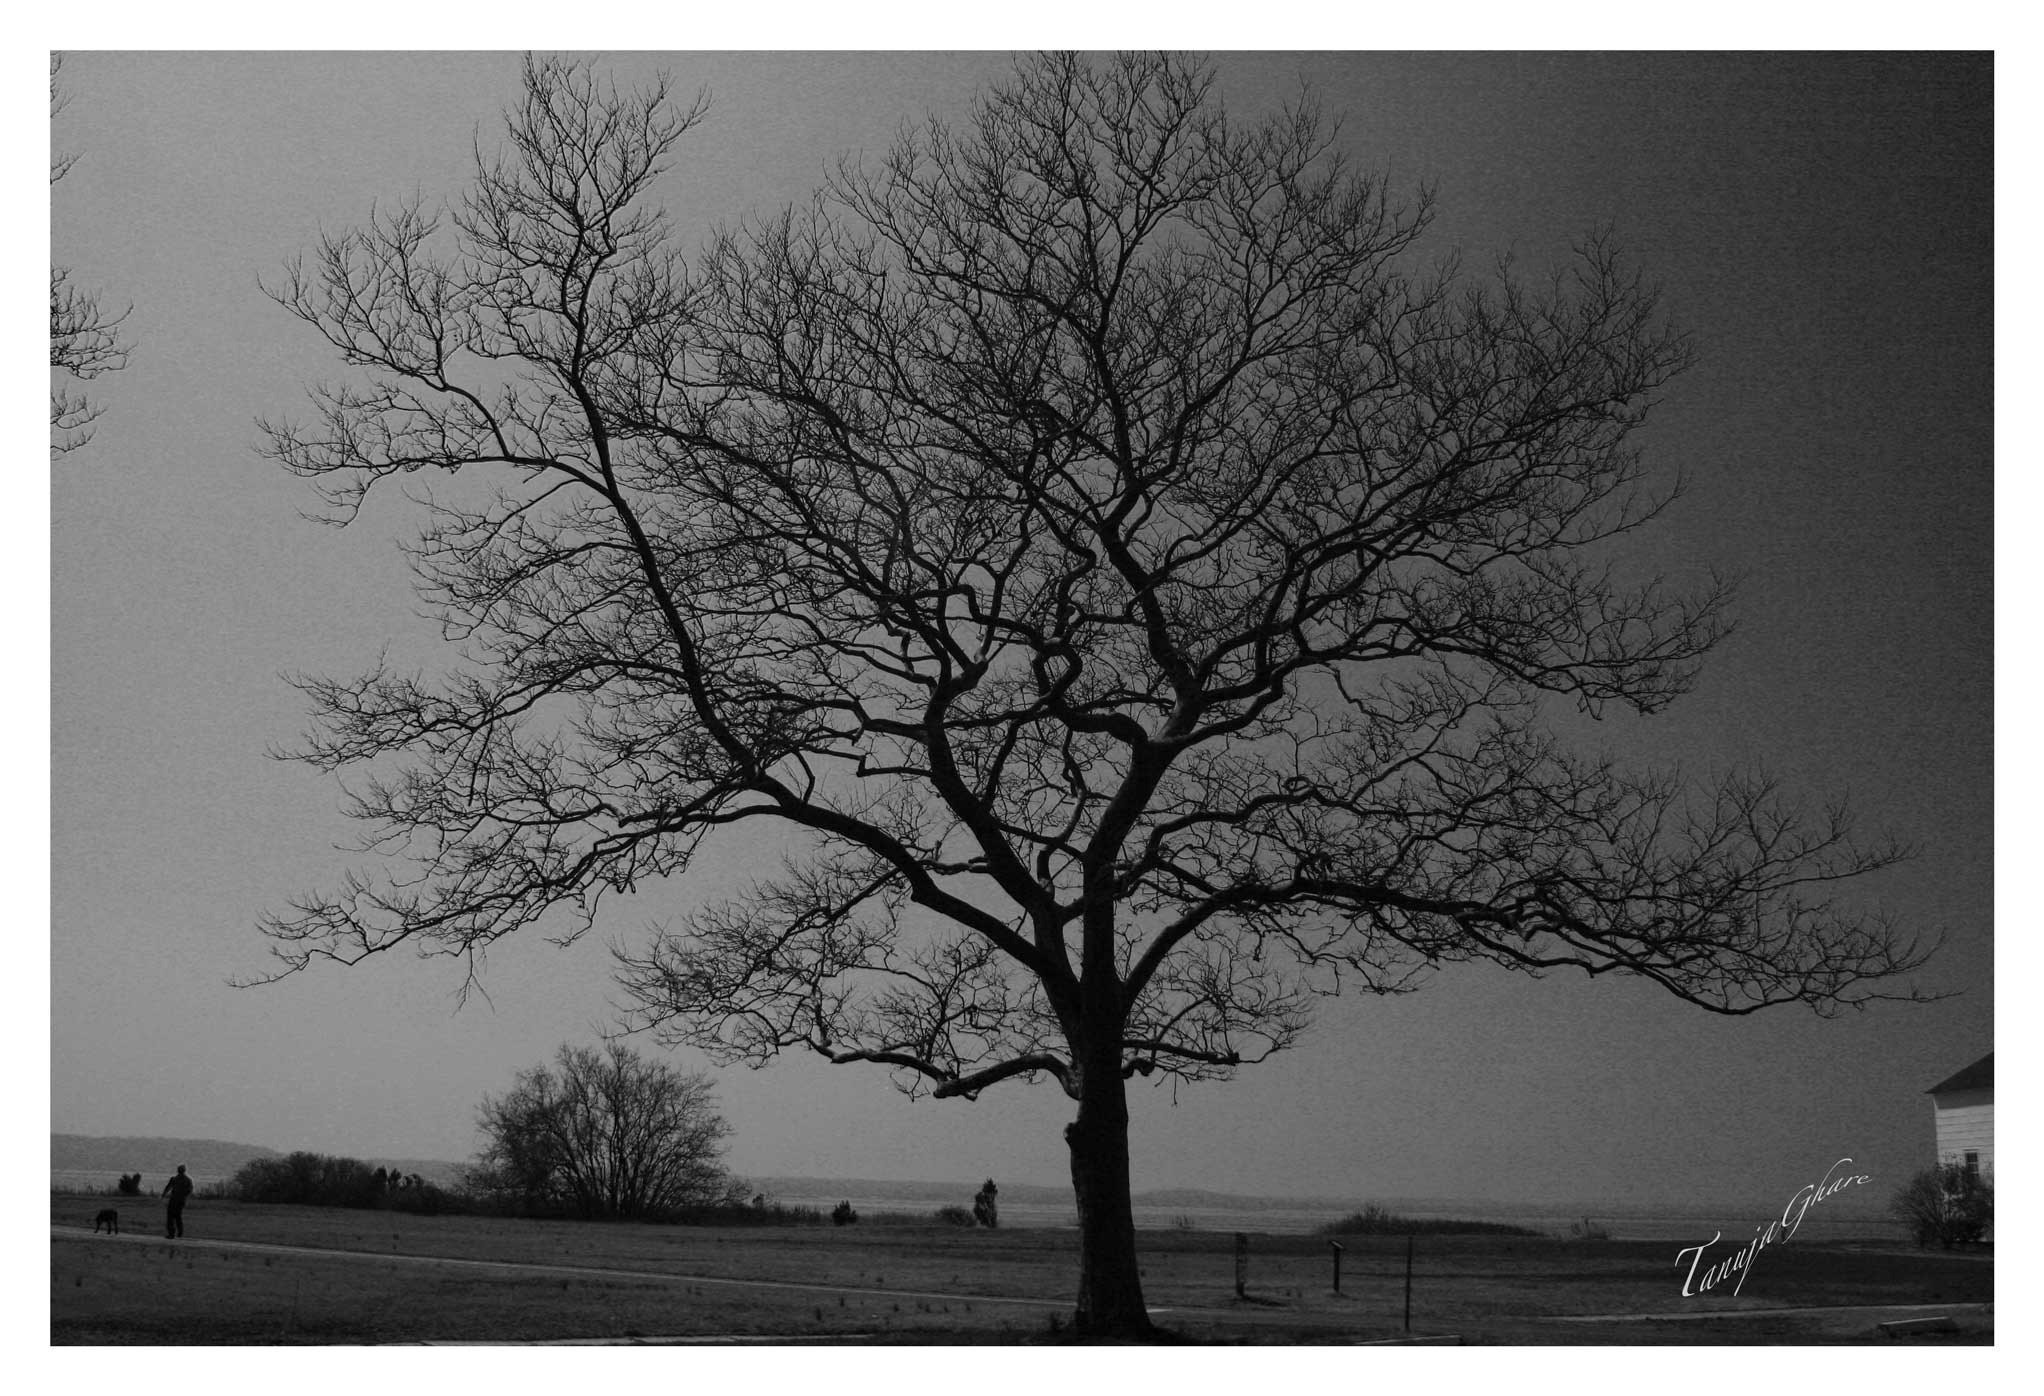 Lonely Tree